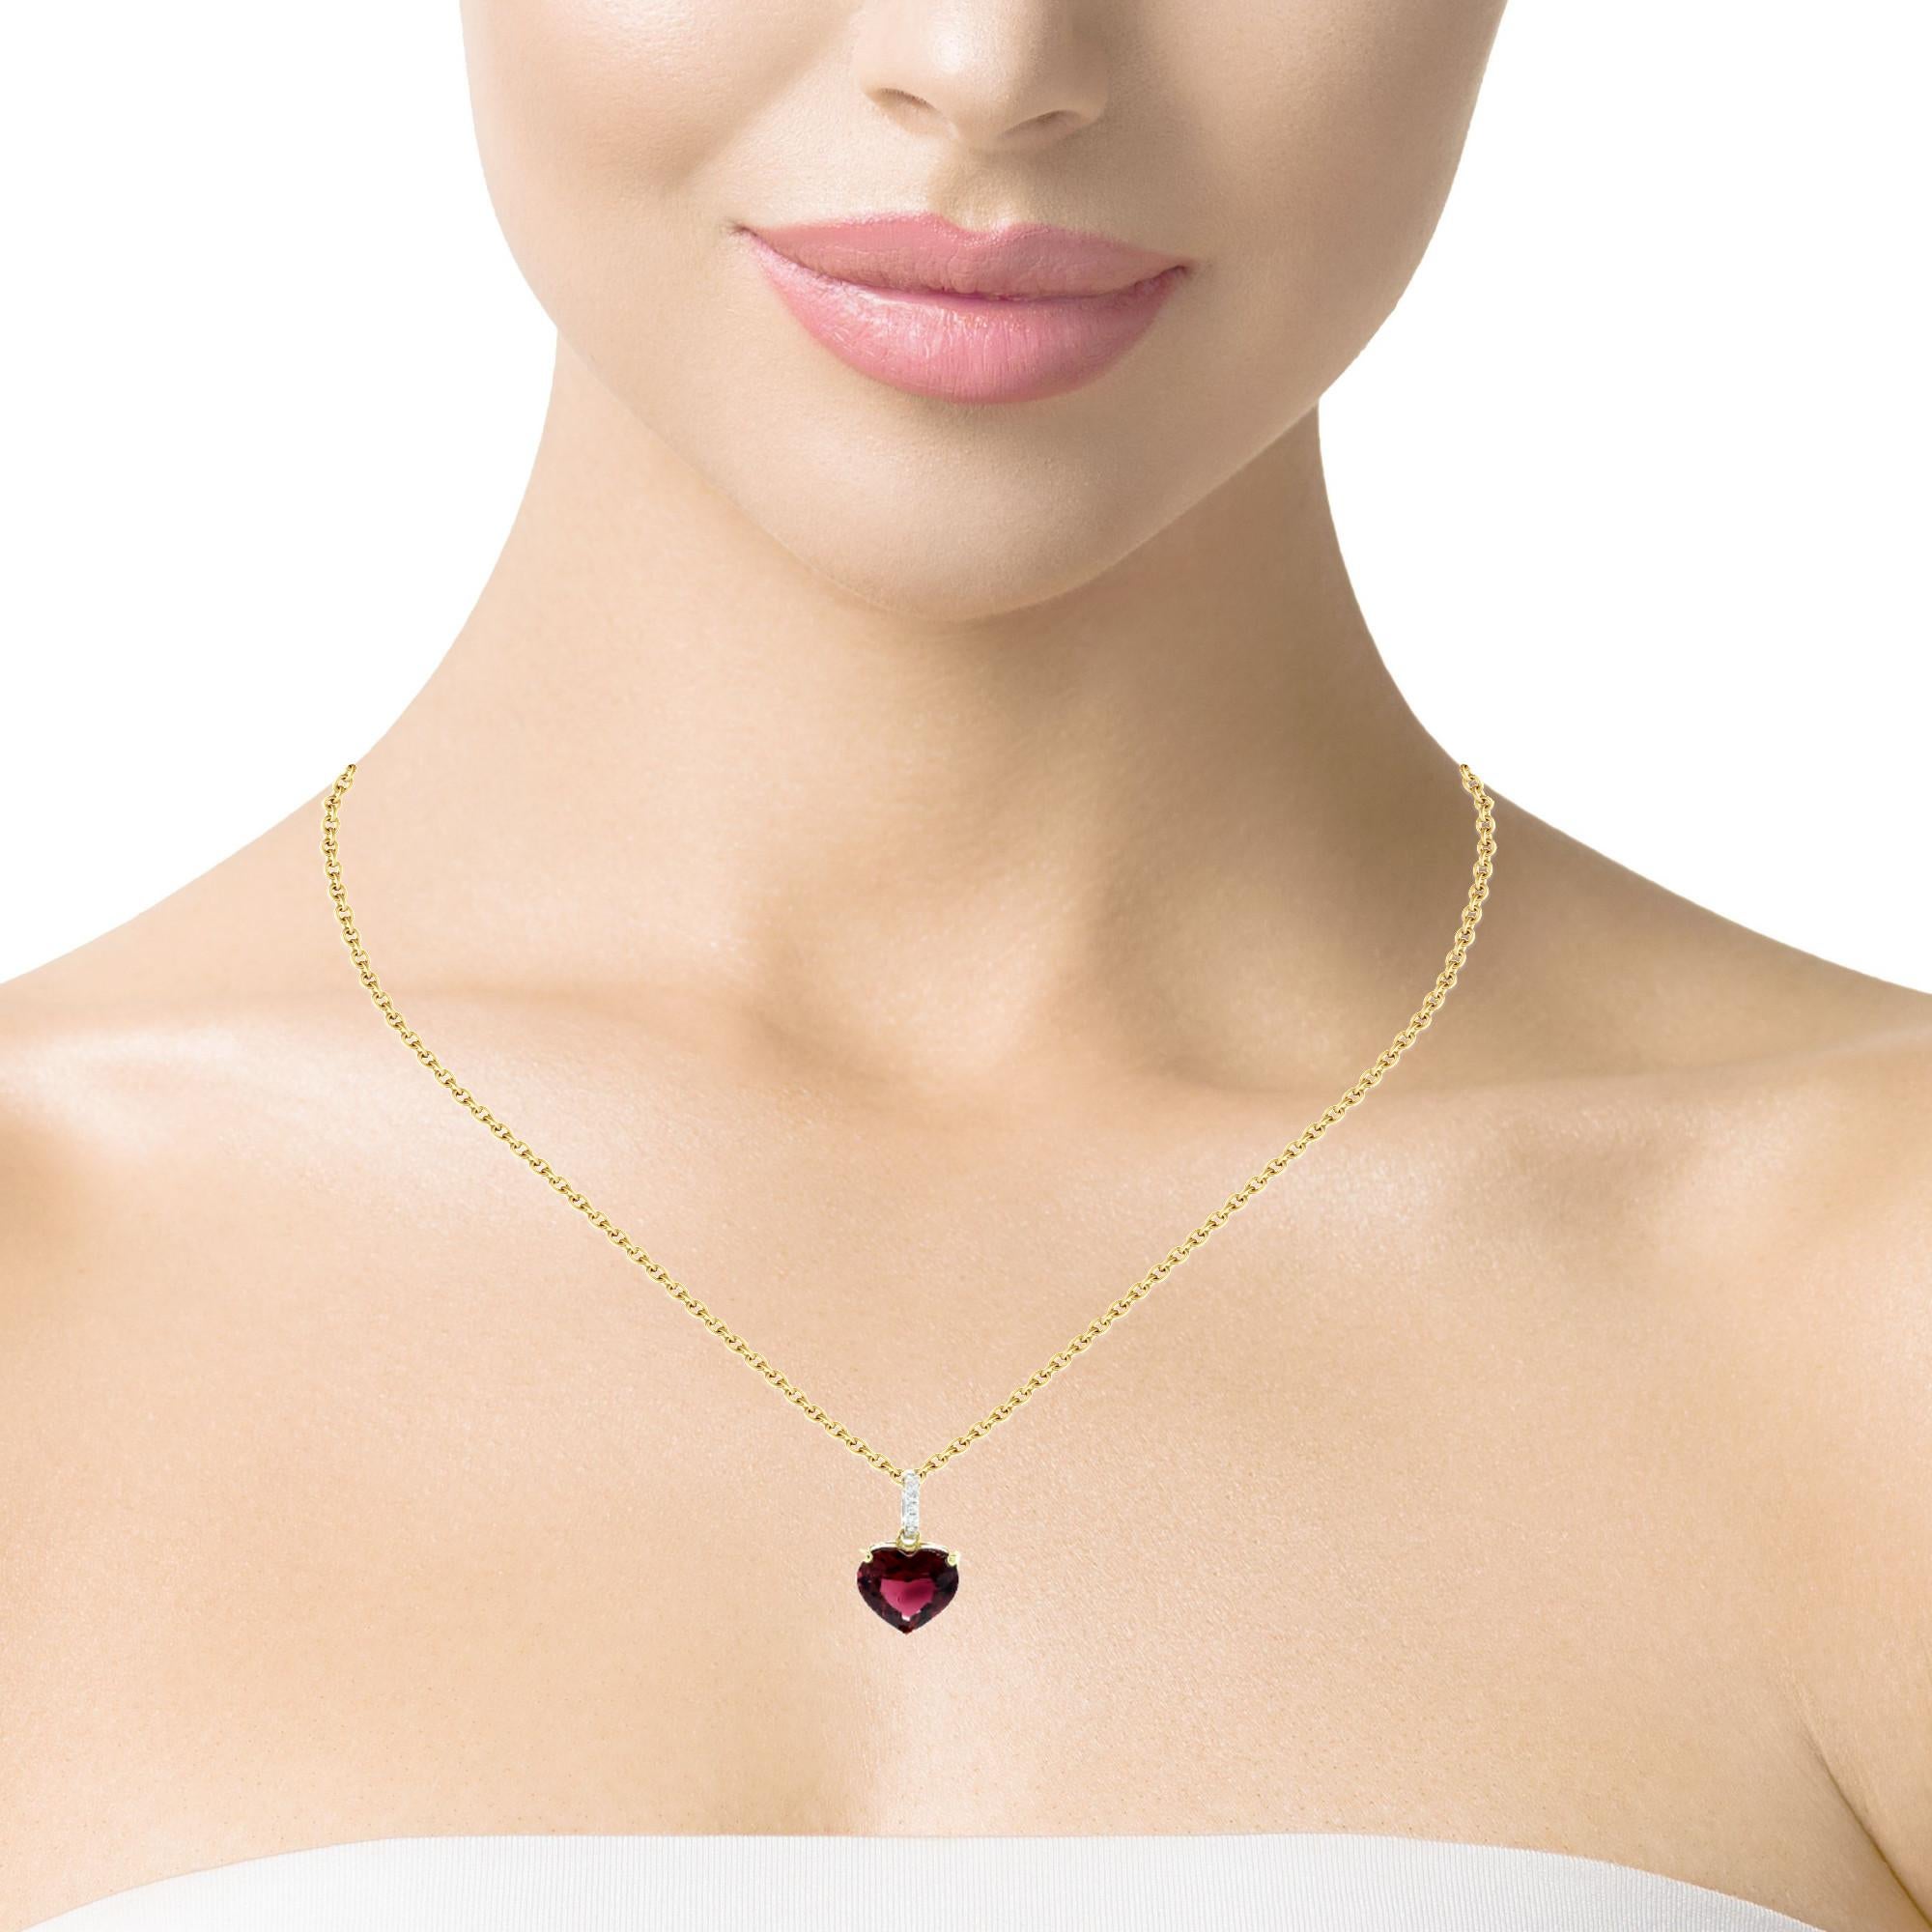 Women's or Men's Rubellite Red Tourmaline Pendant, 9.28 Carat Heart Shape with Diamond Set Bail For Sale